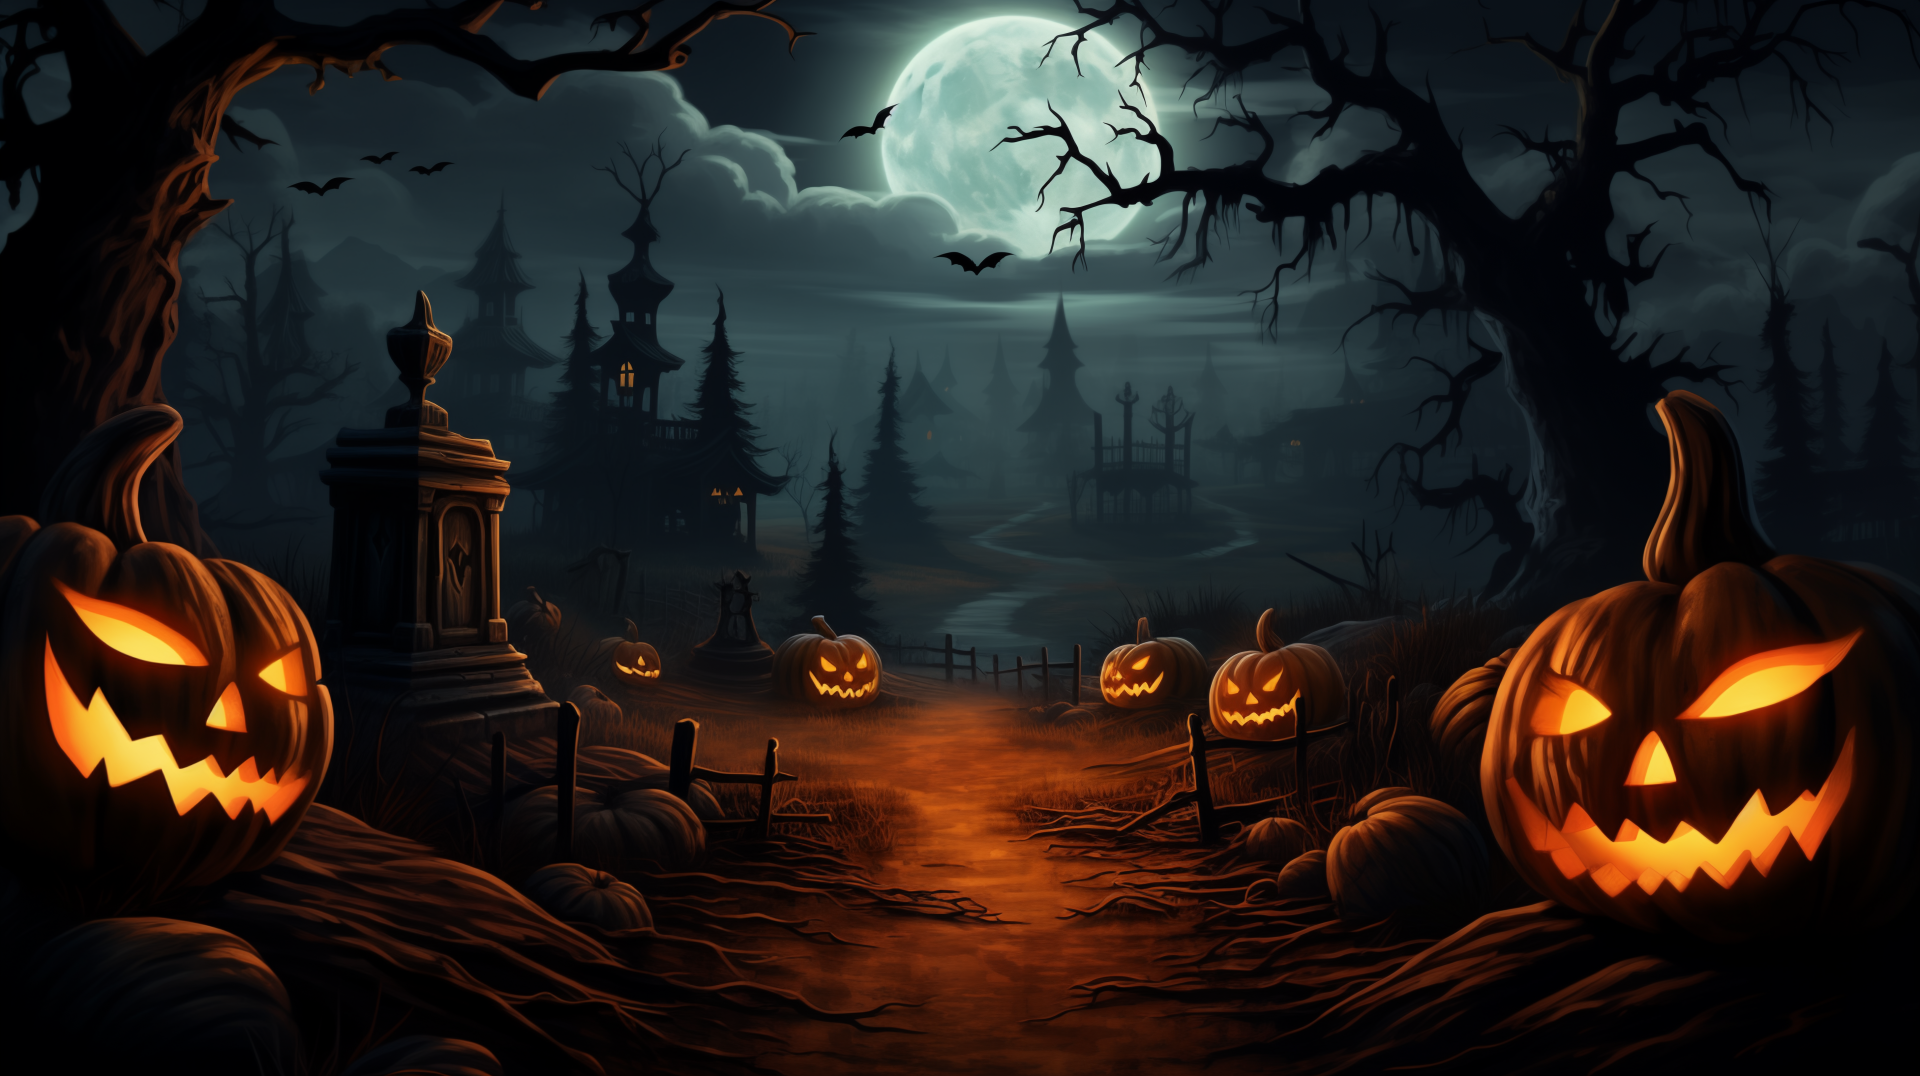 Halloween Pumpkinhead Night - Spooky HD Wallpaper by patrika